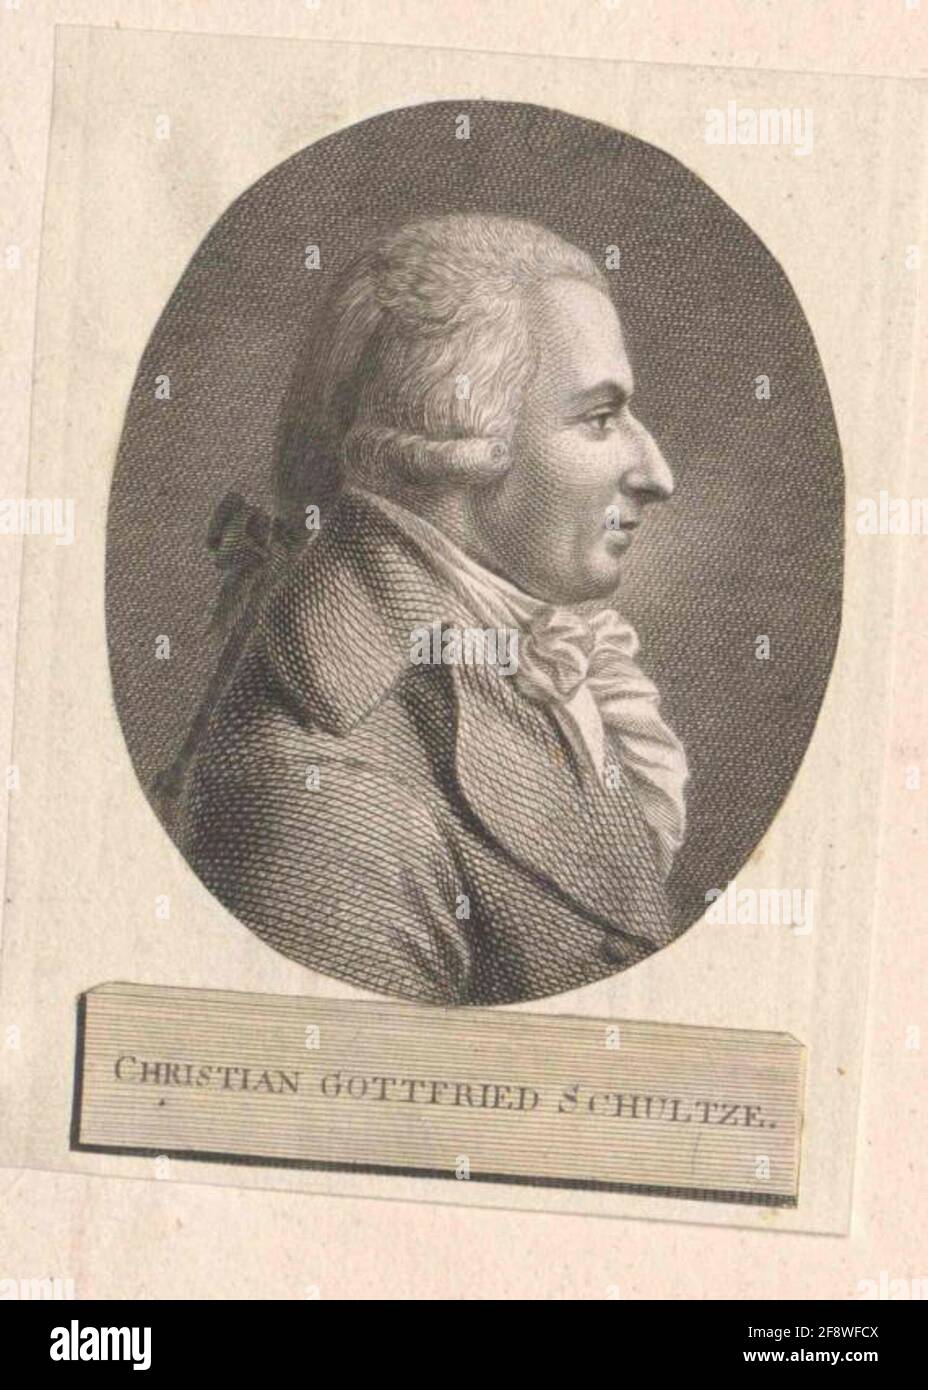 Schulze, Christian Gottfried. Stock Photo